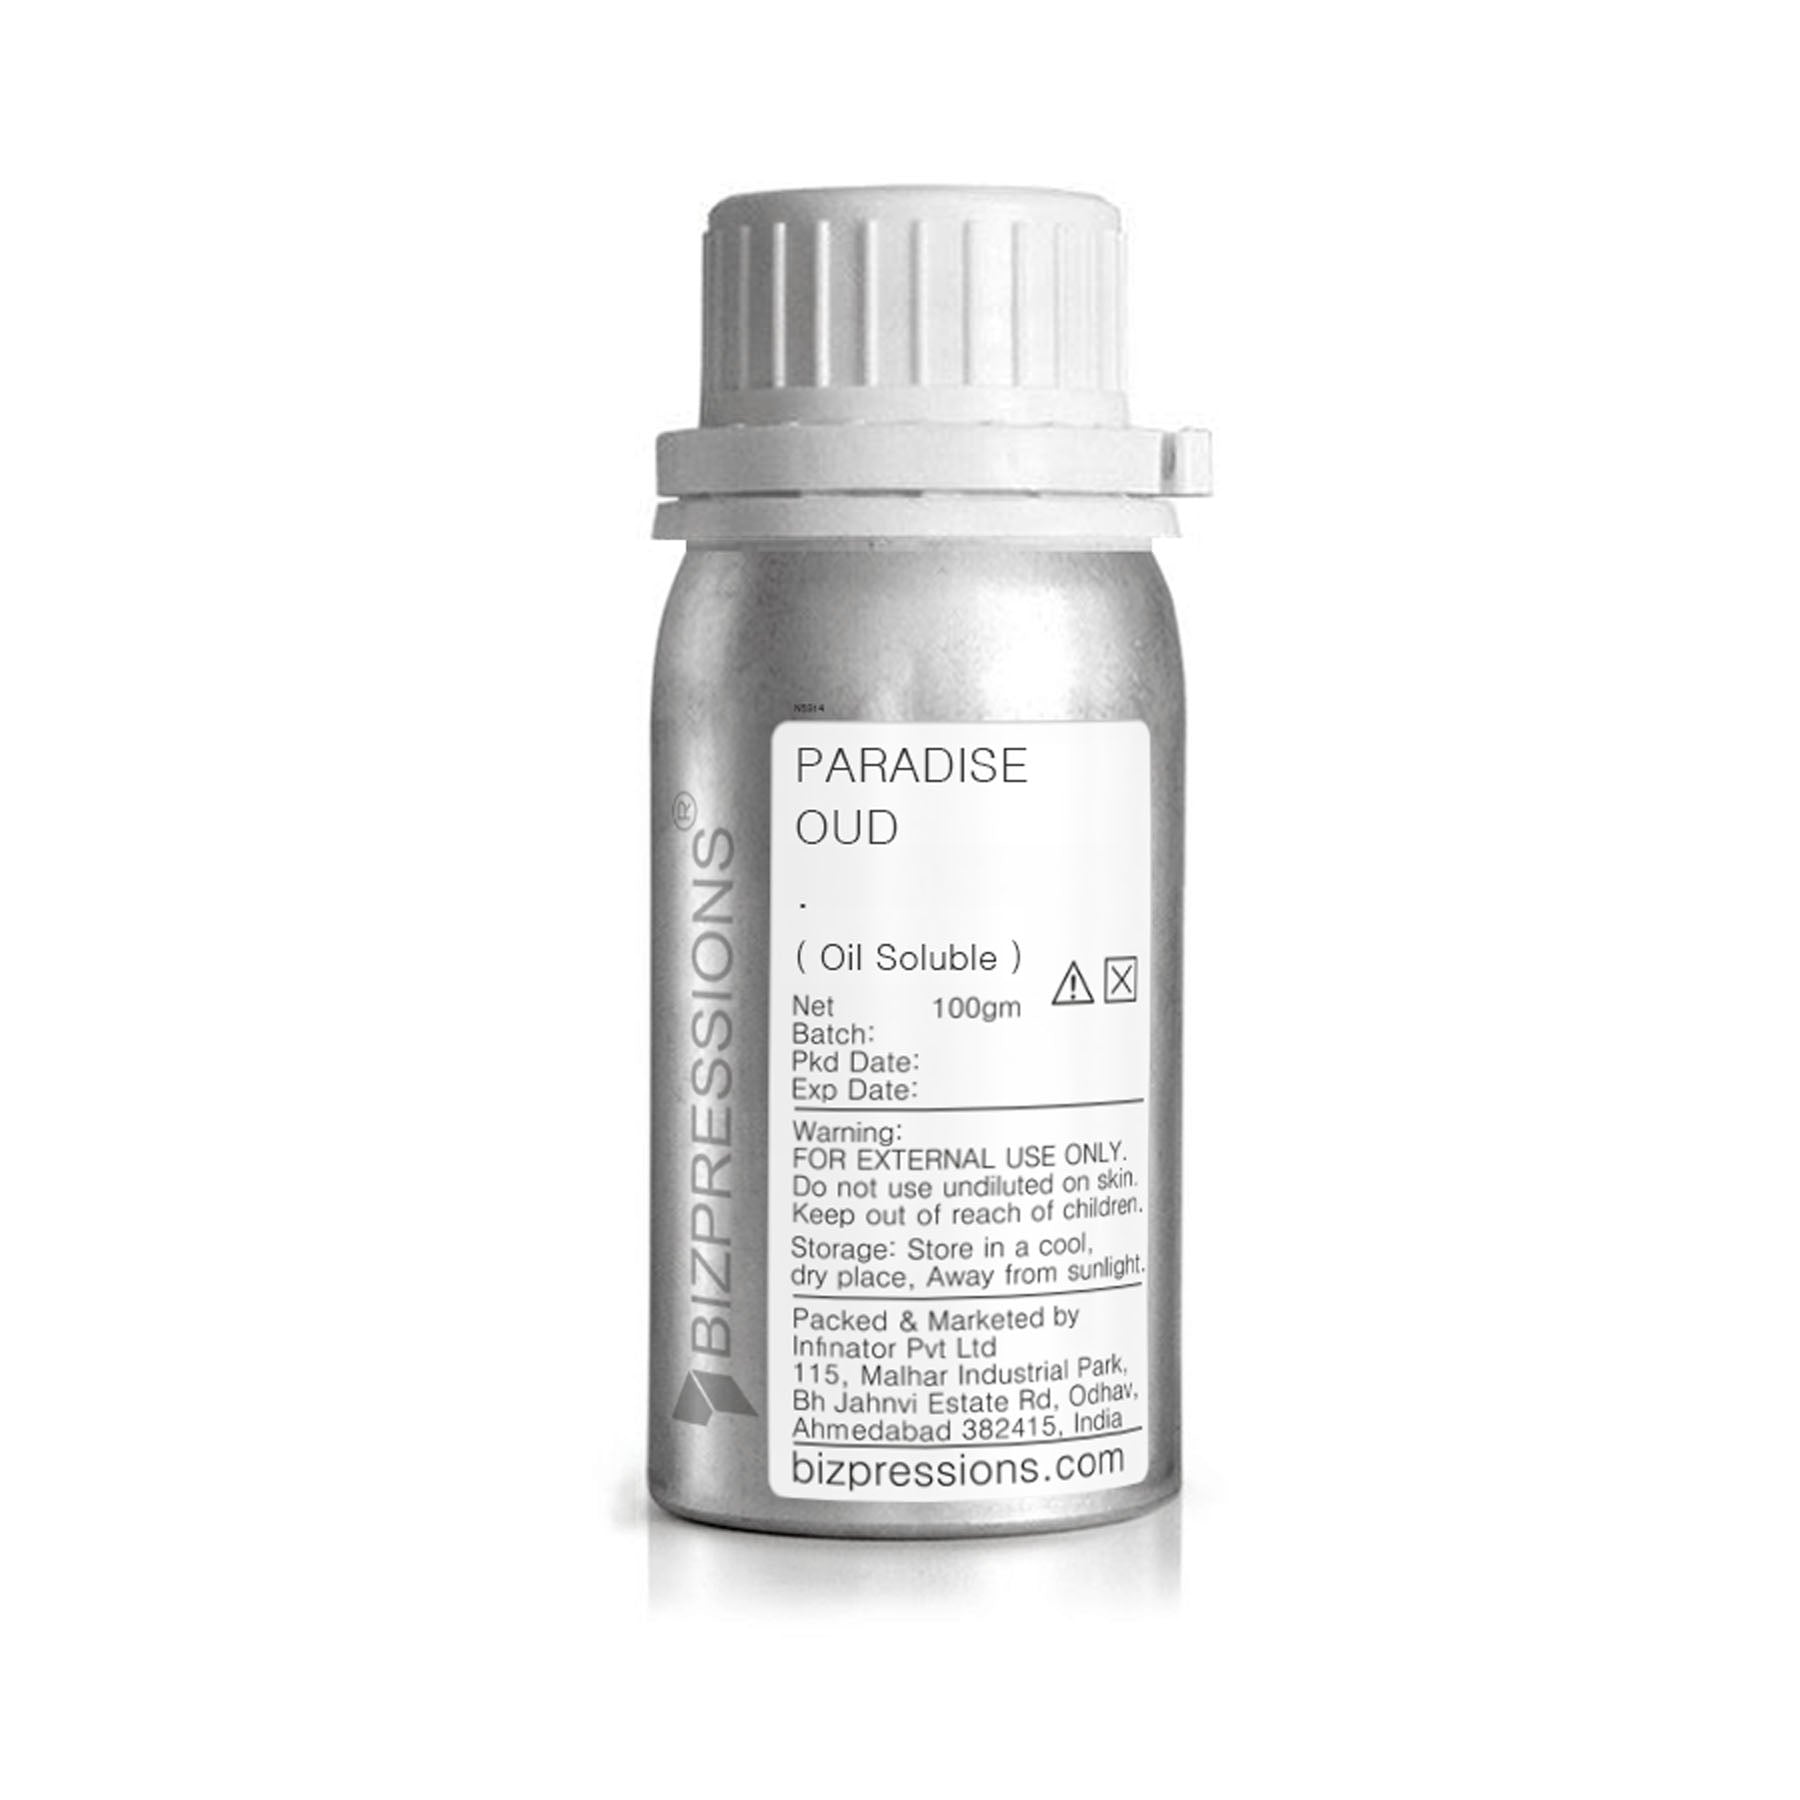 PARADISE OUD - Fragrance ( Oil Soluble ) - 100 gm